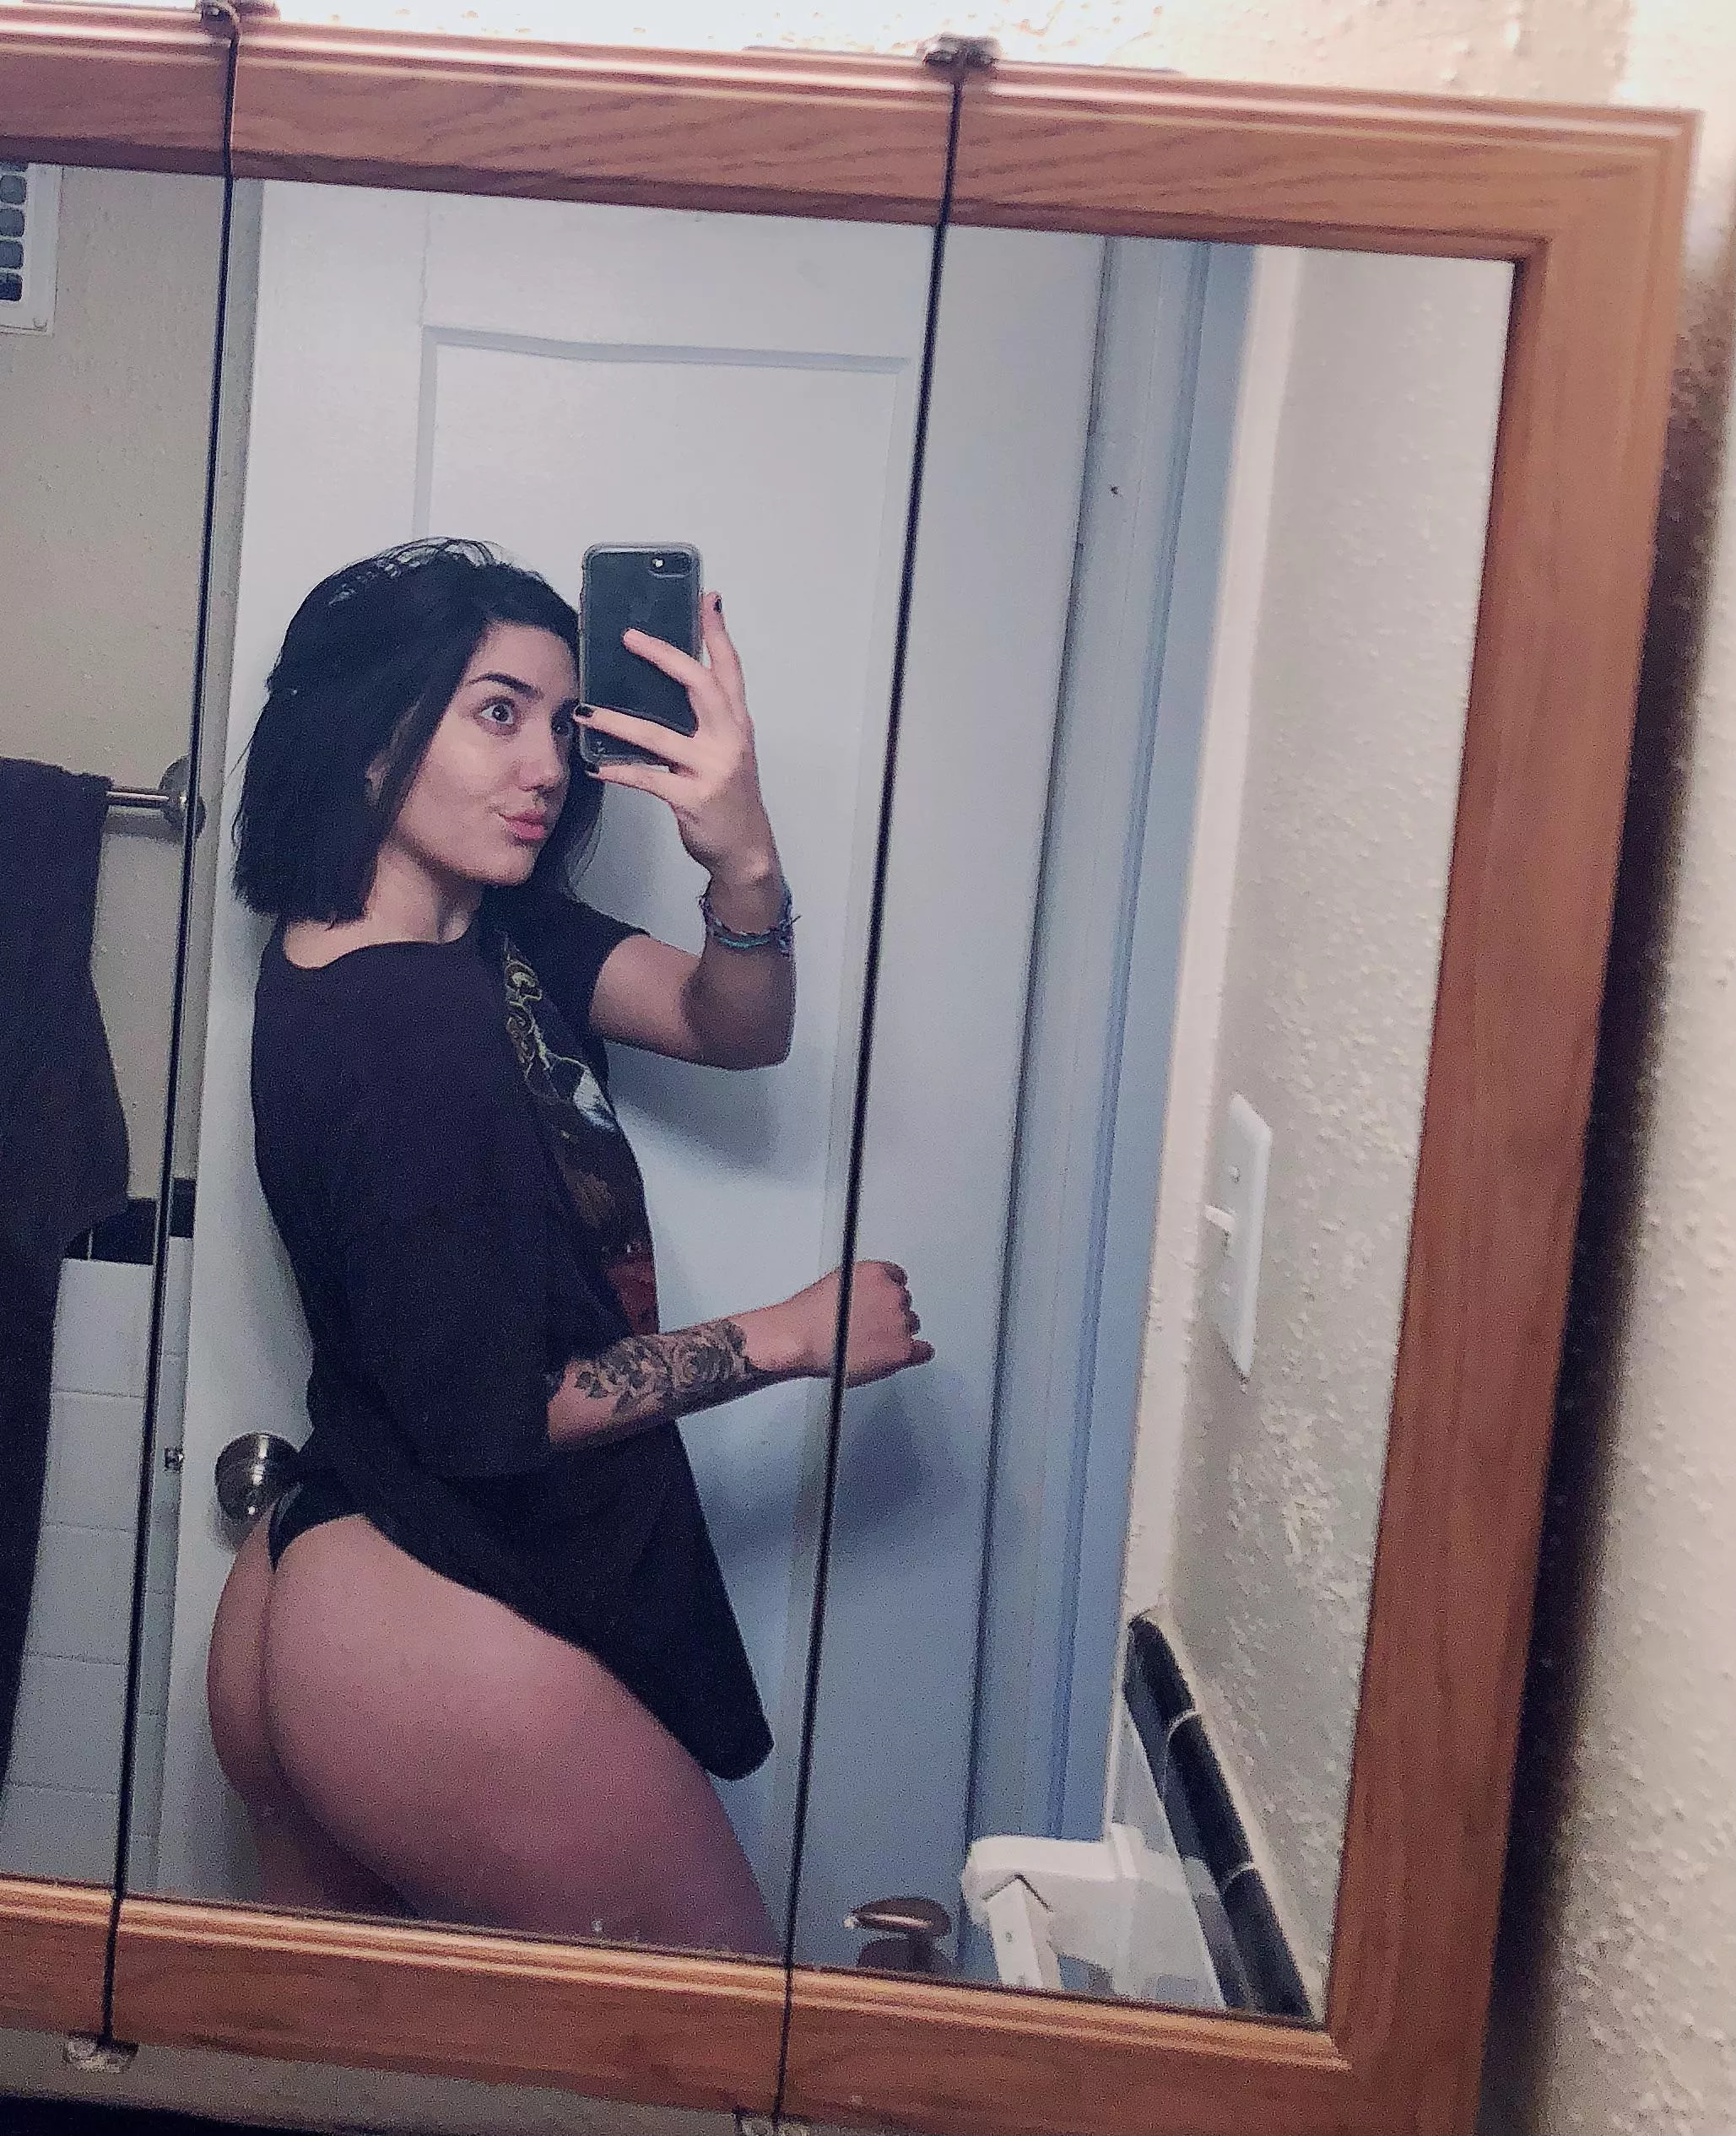 Big Booty Latina Pics